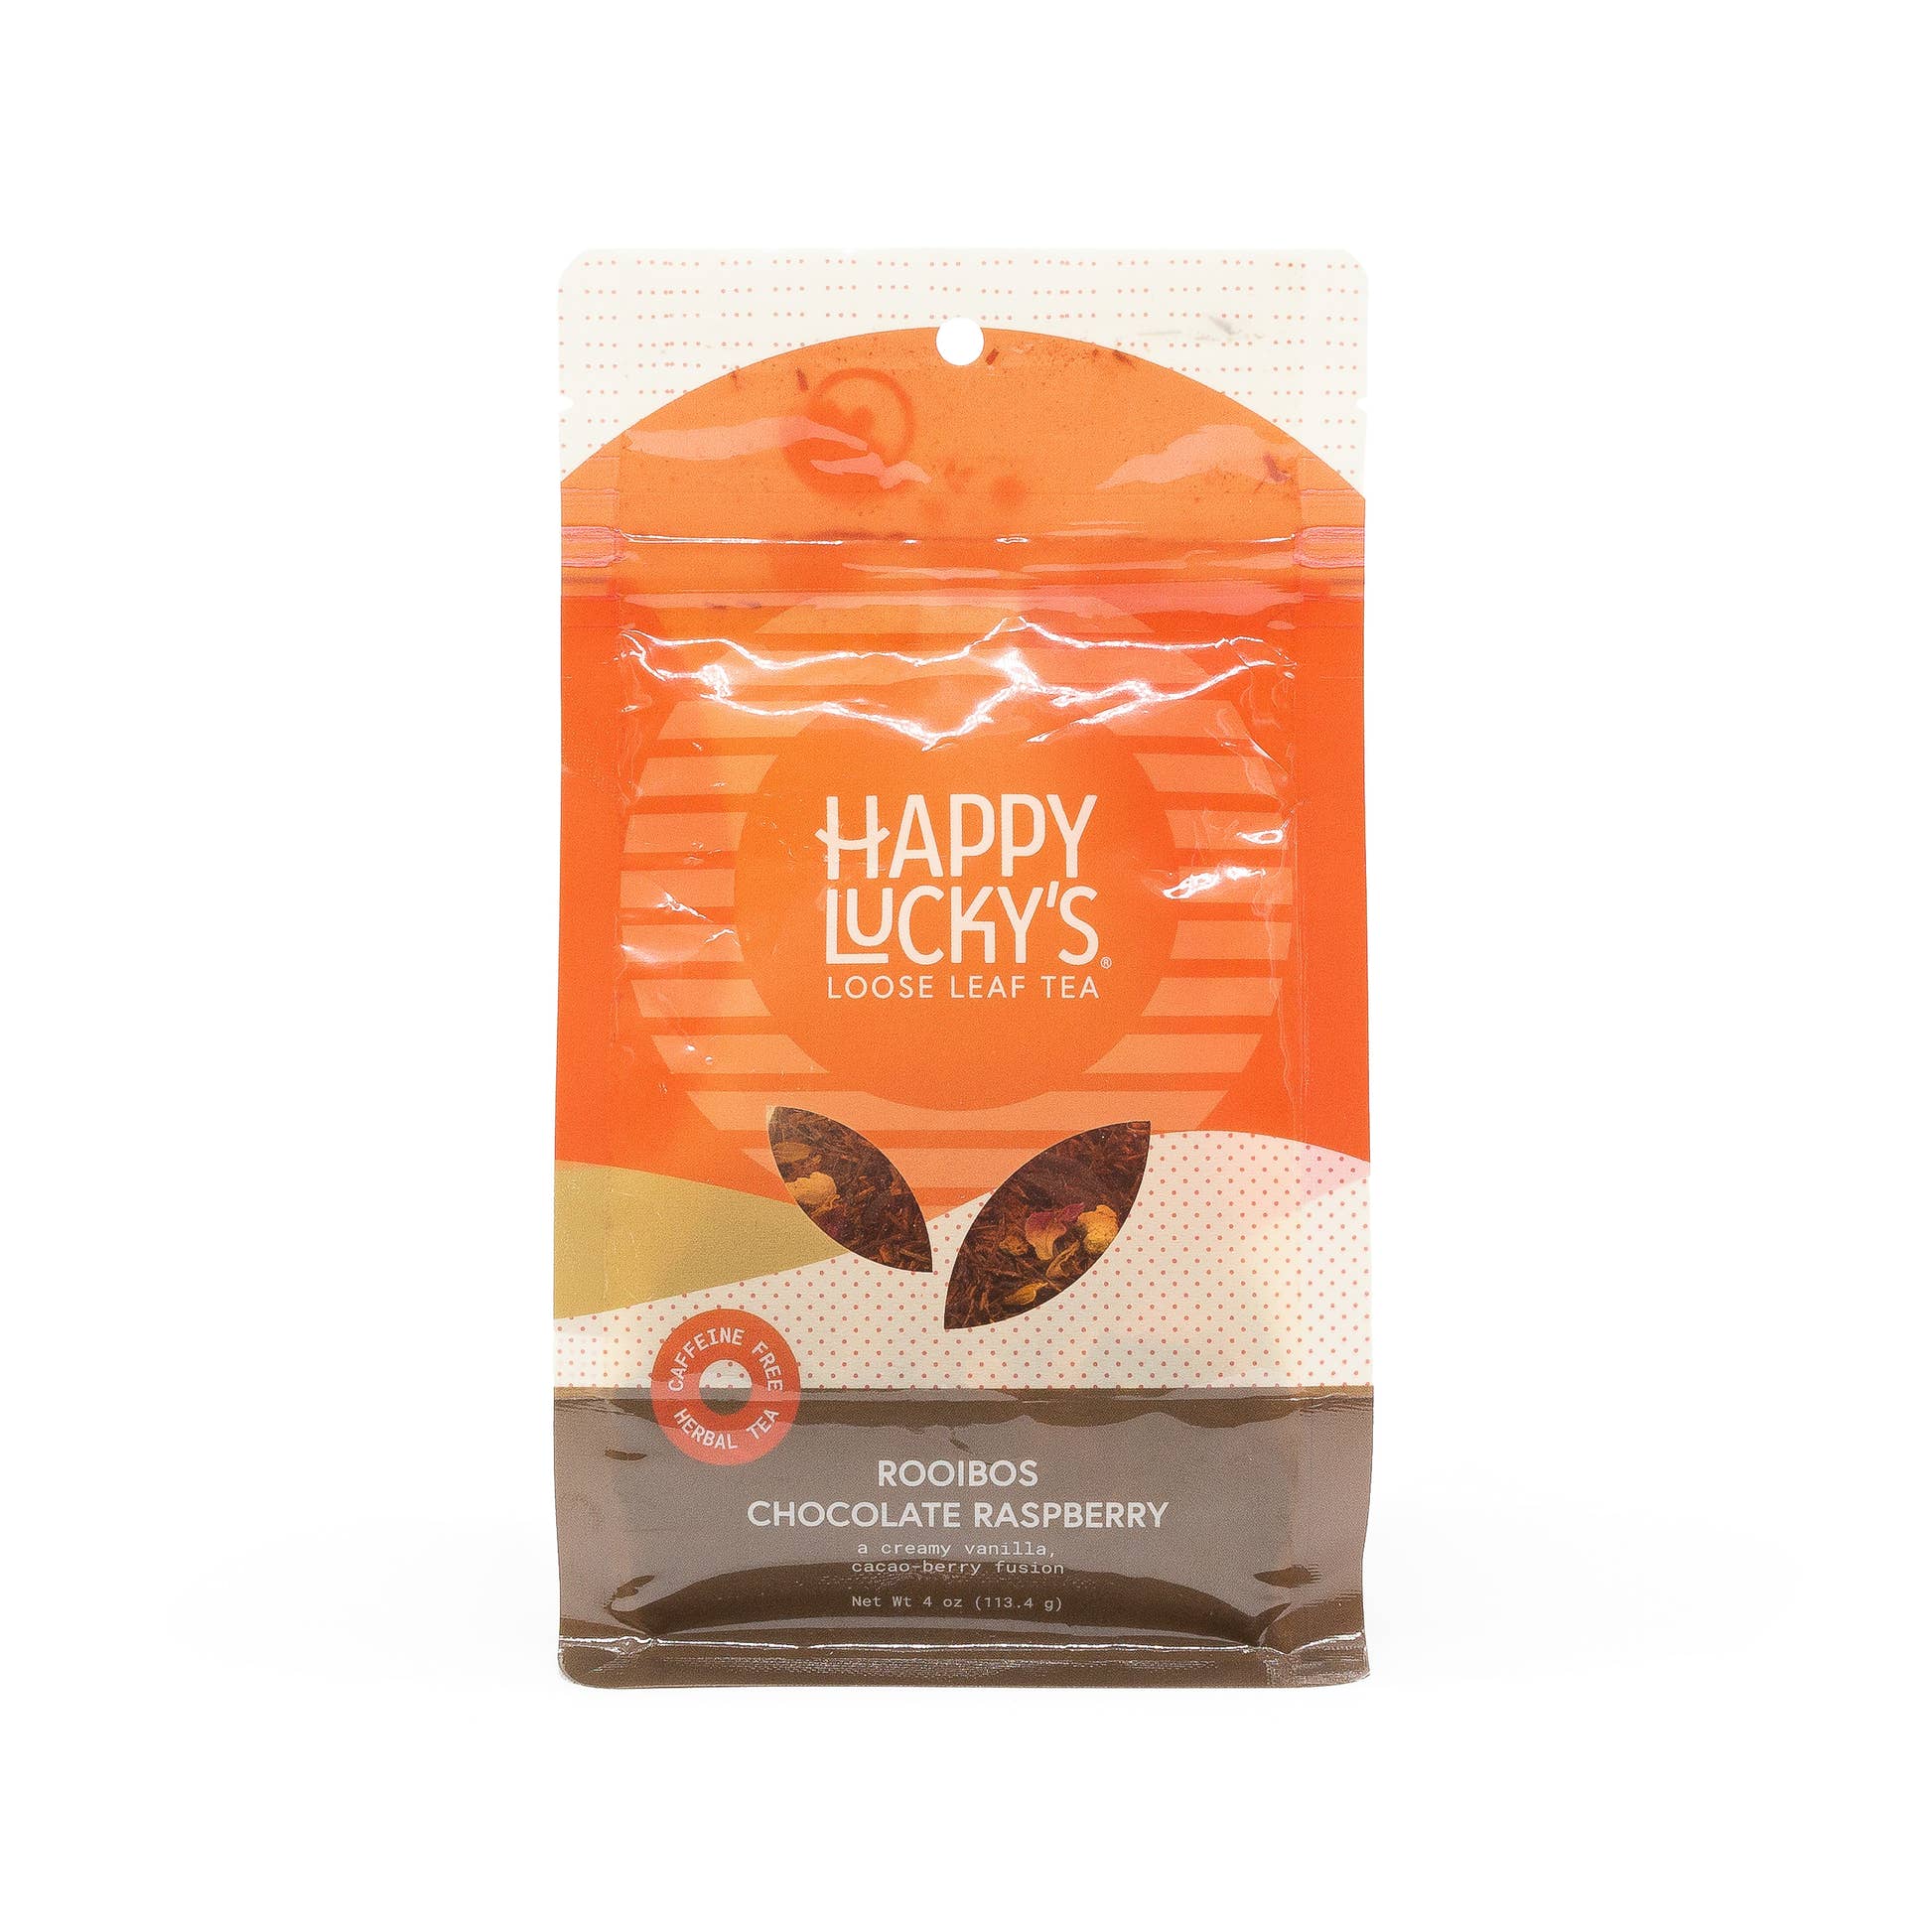 Rooibos Chocolate Raspberry by Happy Lucky's loose leaf tea package caffeine free herbal tea